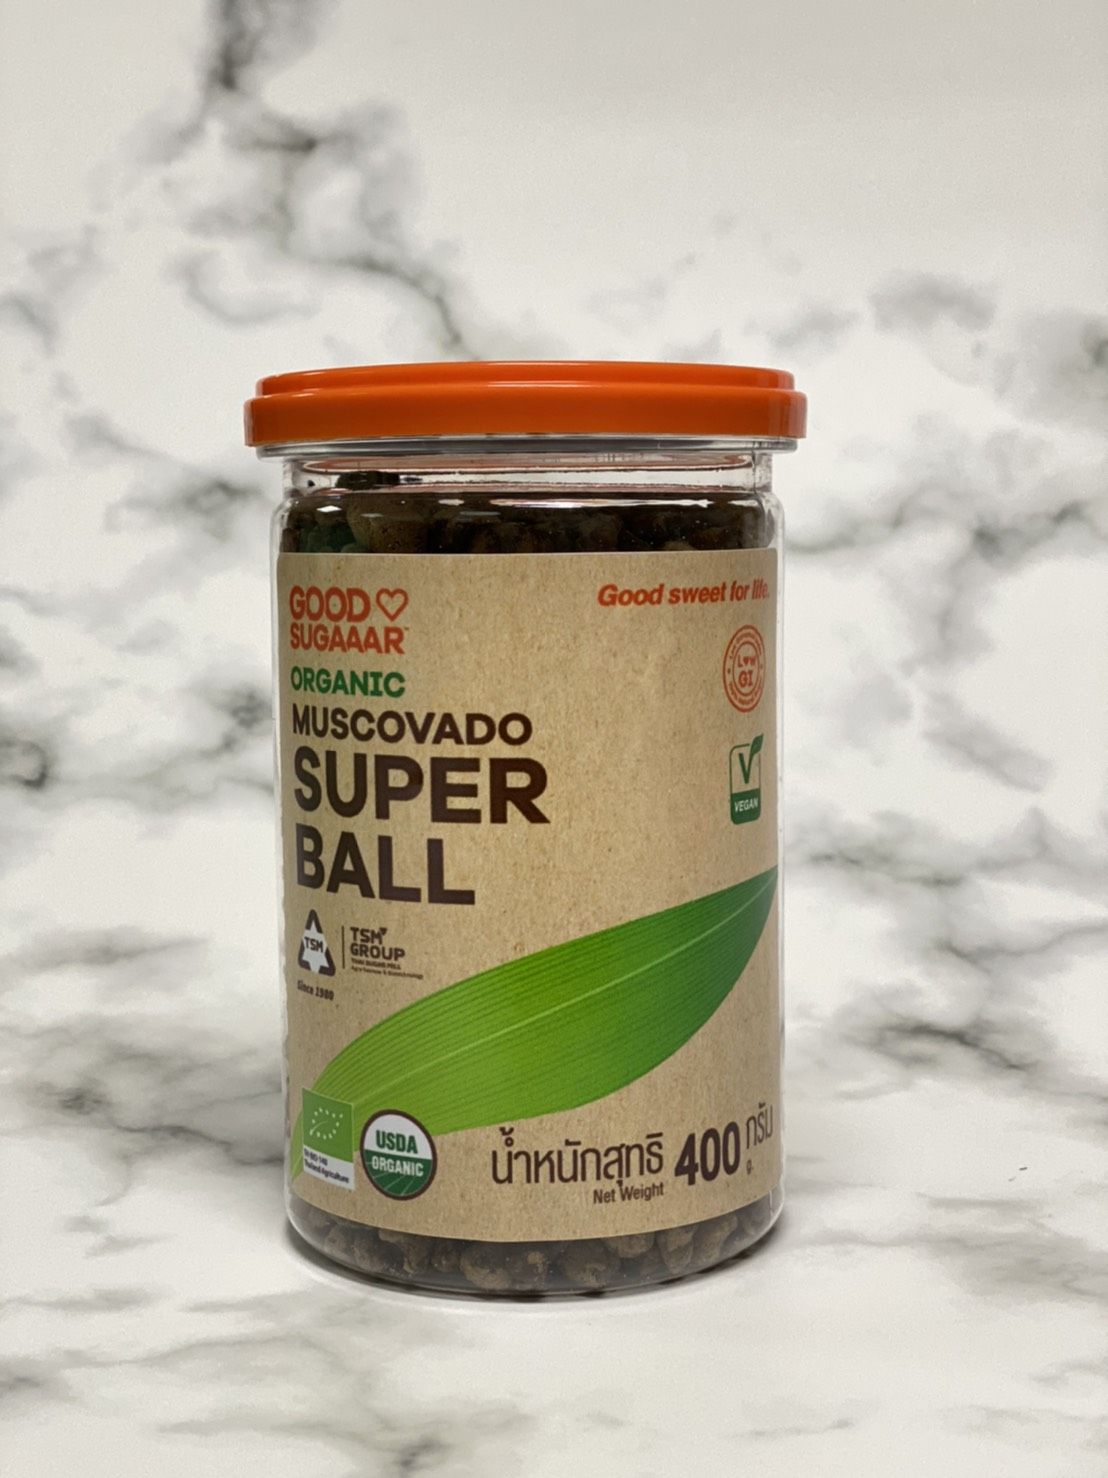 Organic Muscovado Super ball ออแกนิค มัสโควาโด้ ซุปเปอร์ บอล 400 กรัม